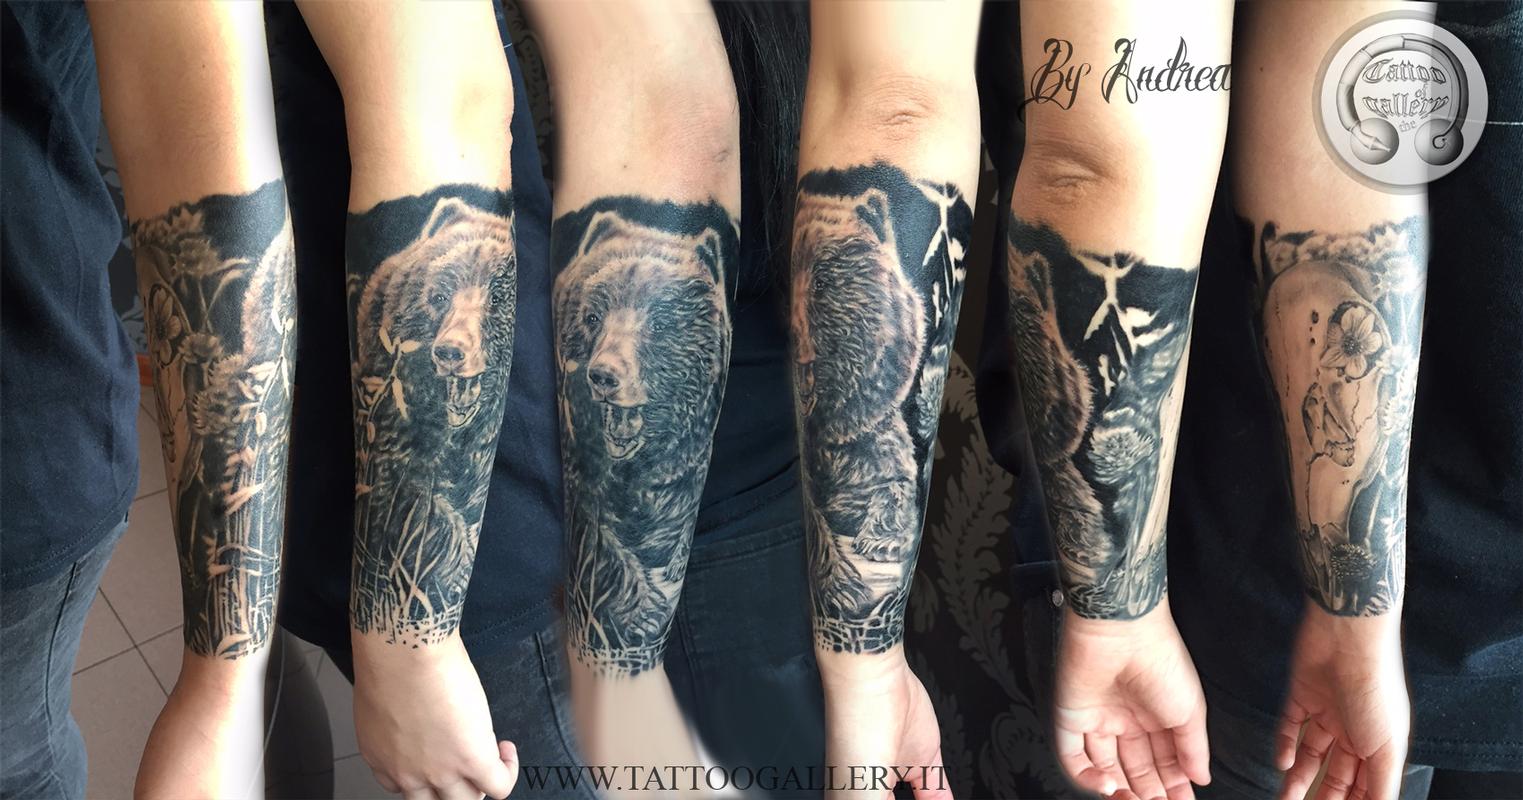 The Gallery Of Tattoo Tattoos Half Sleeve Bear